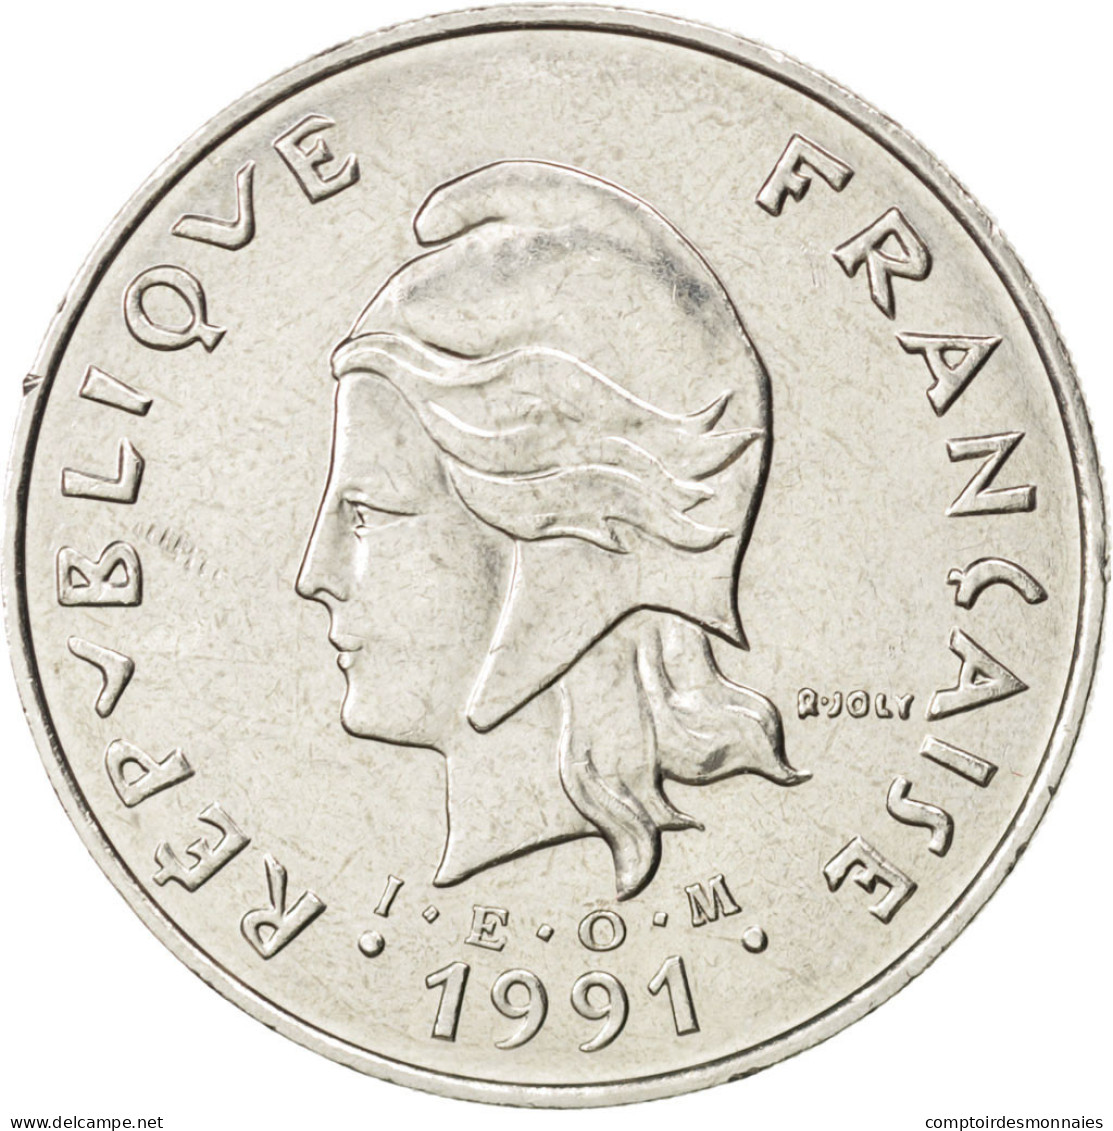 Monnaie, Nouvelle-Calédonie, 50 Francs, 1991, SUP, Nickel, KM:13, Lecompte:127 - New Caledonia